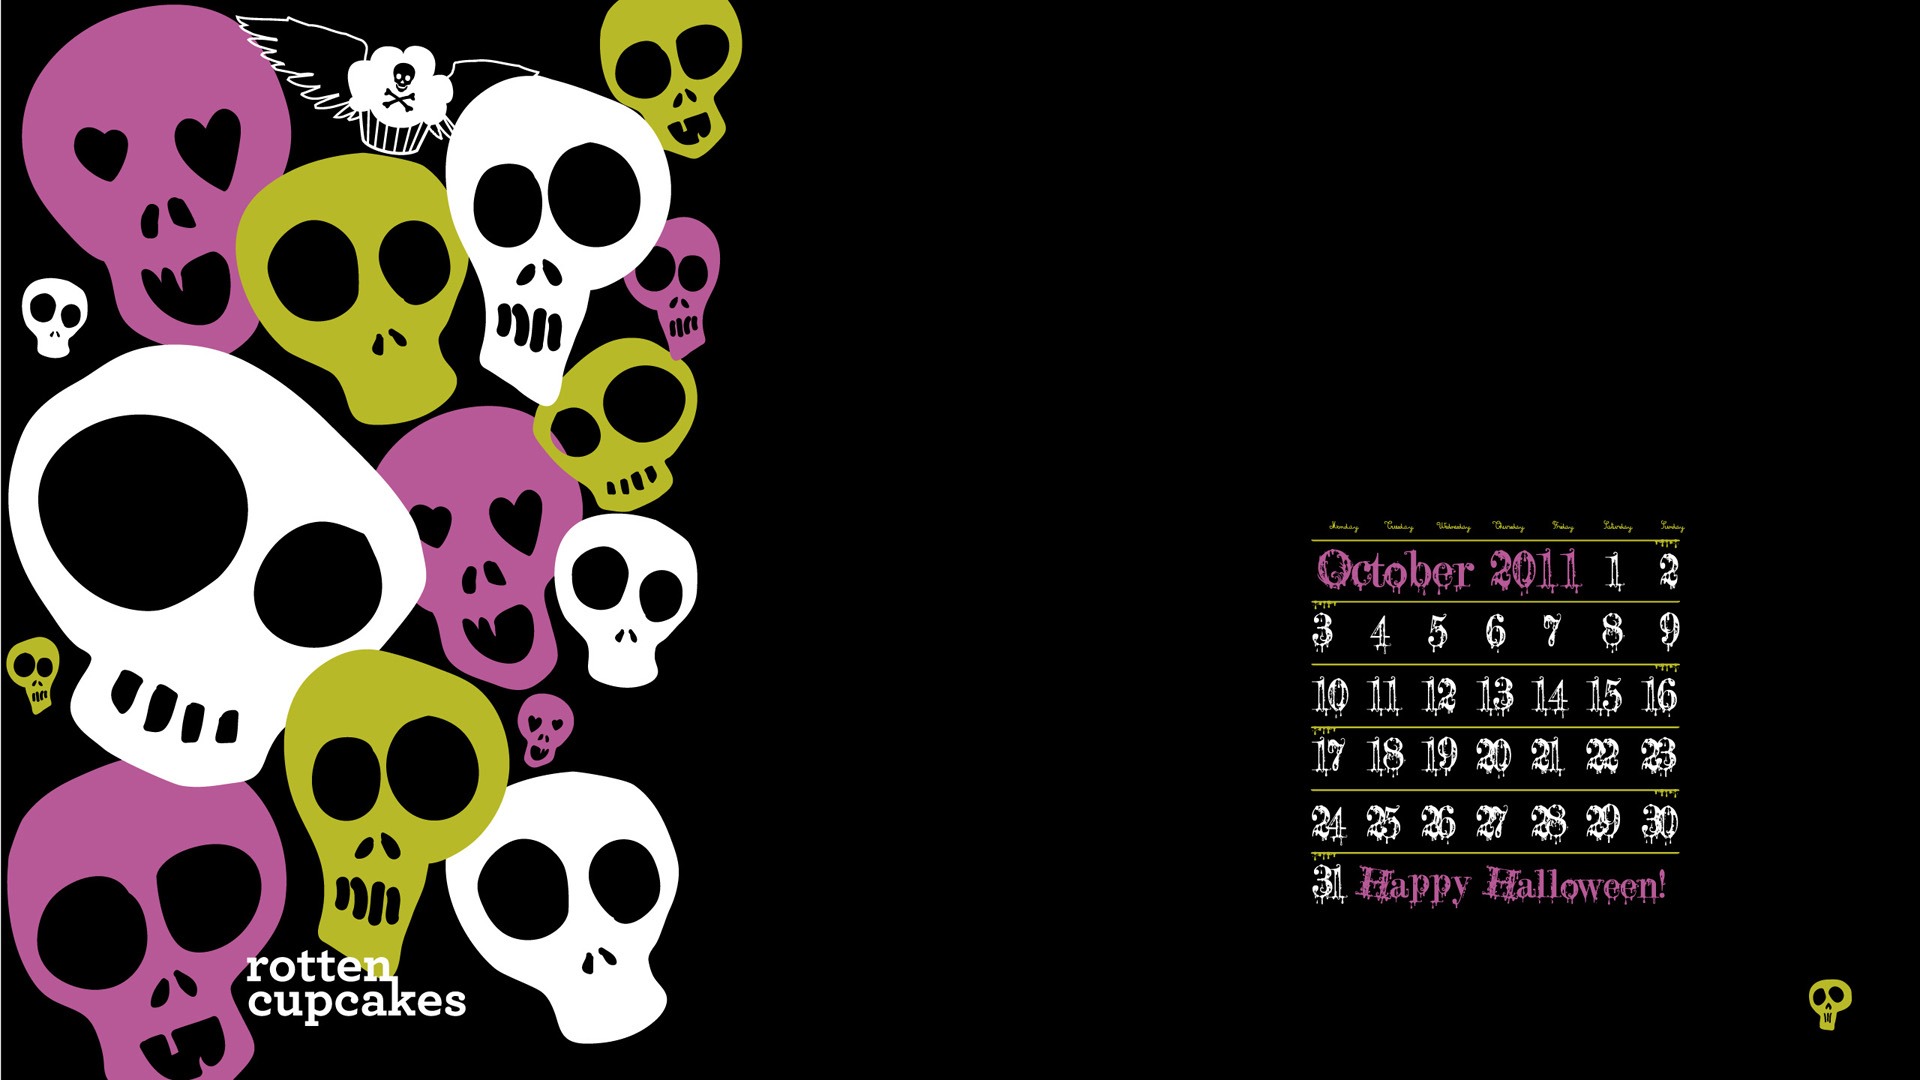 October 2011 Calendar Wallpaper (2) #14 - 1920x1080